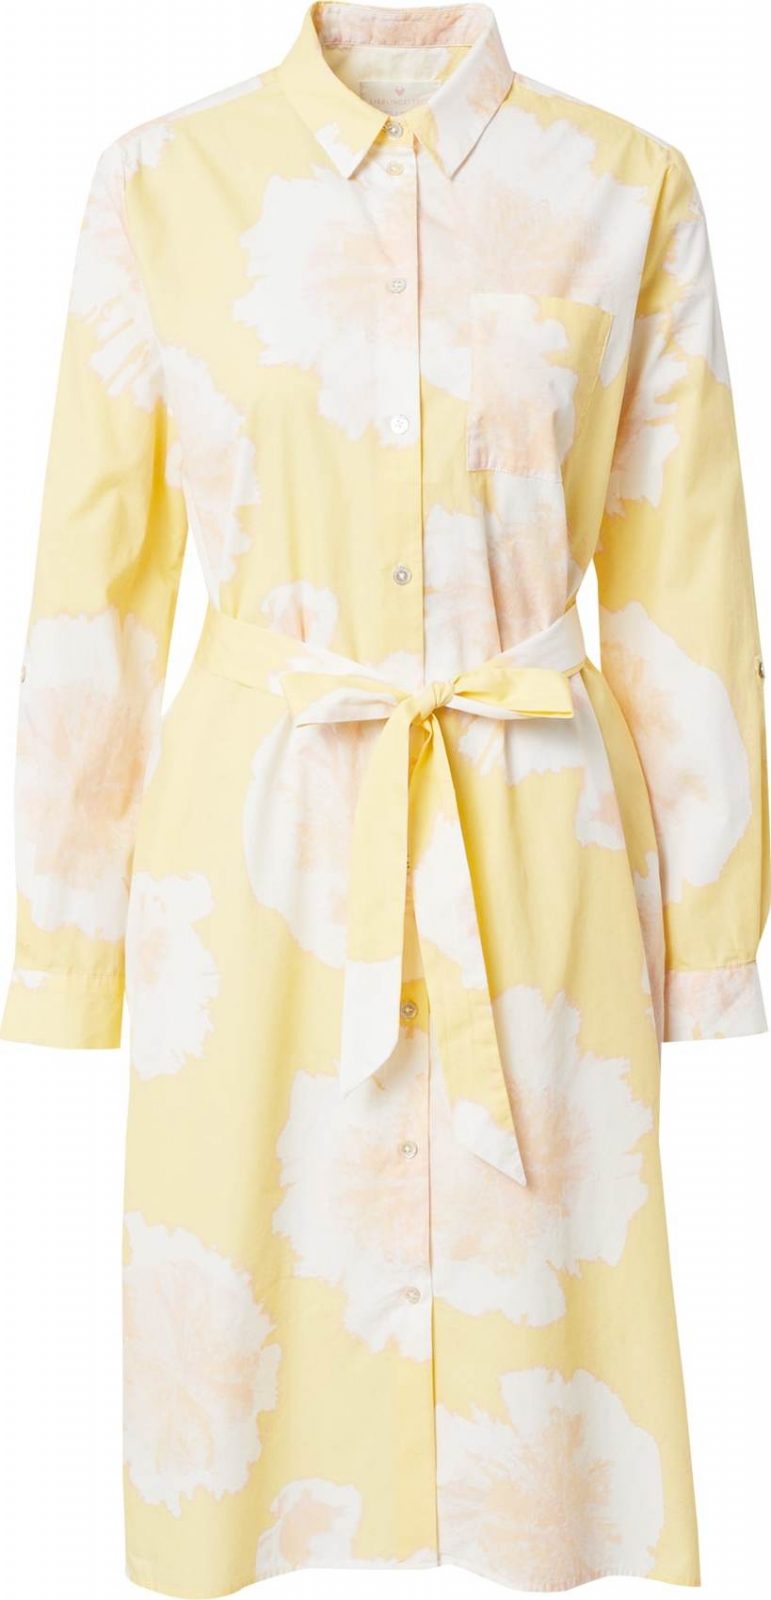 LIEBLINGSSTÜCK Košilové šaty 'Rafaela' žlutá / bílá / růžová